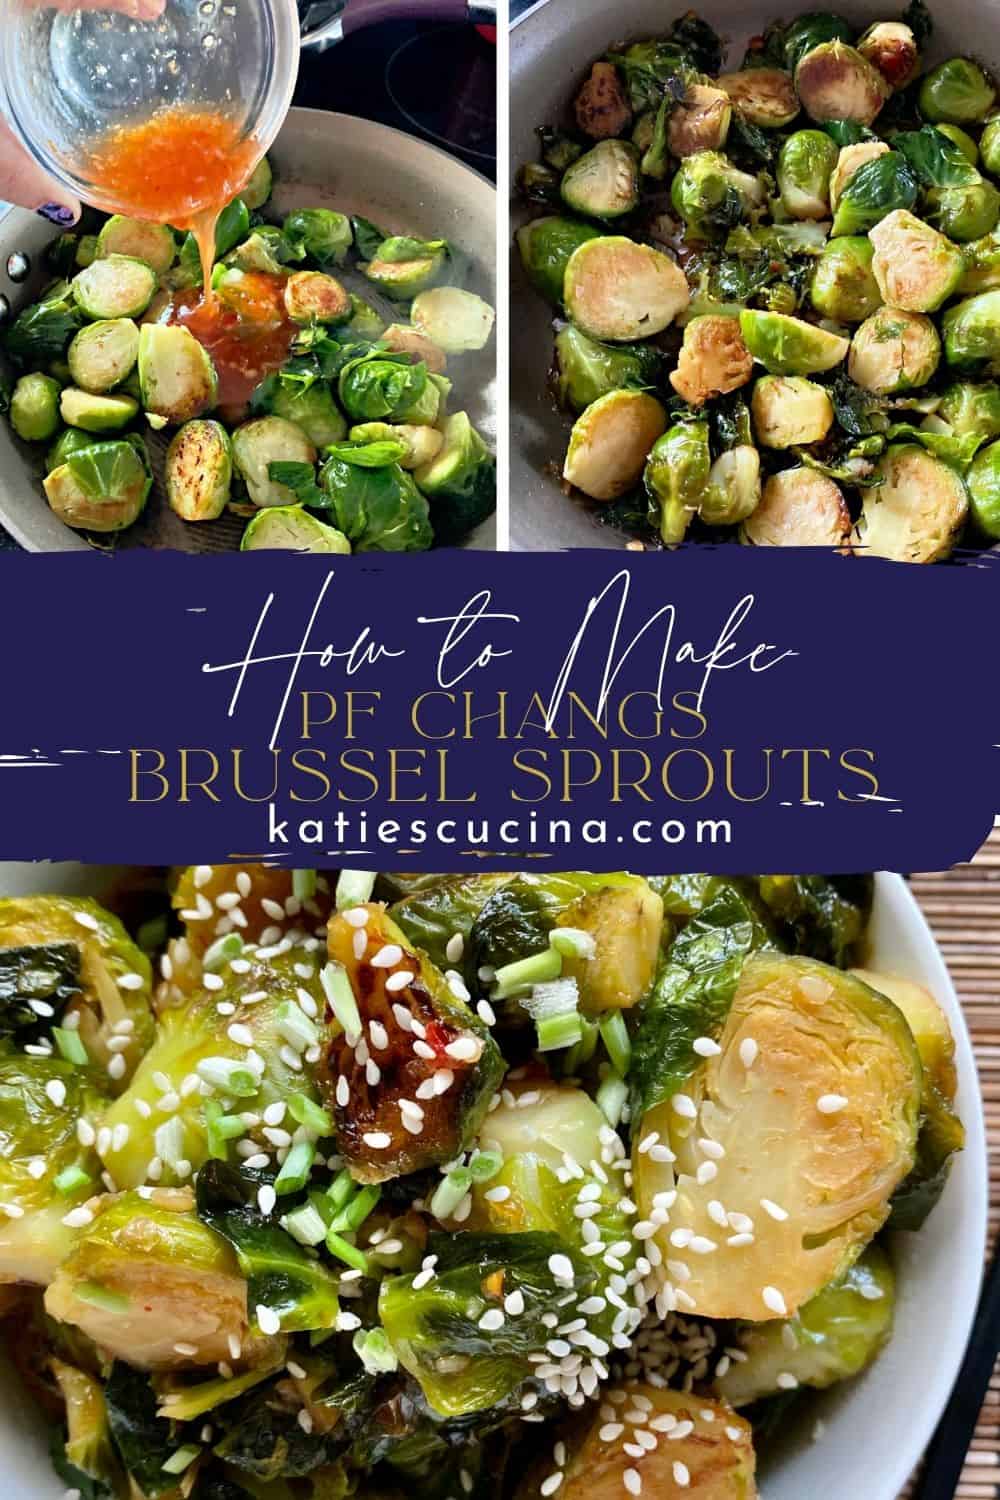 Sweet Chili Brussels Sprouts + P.F. Changs - New Fall Seasonal Menu